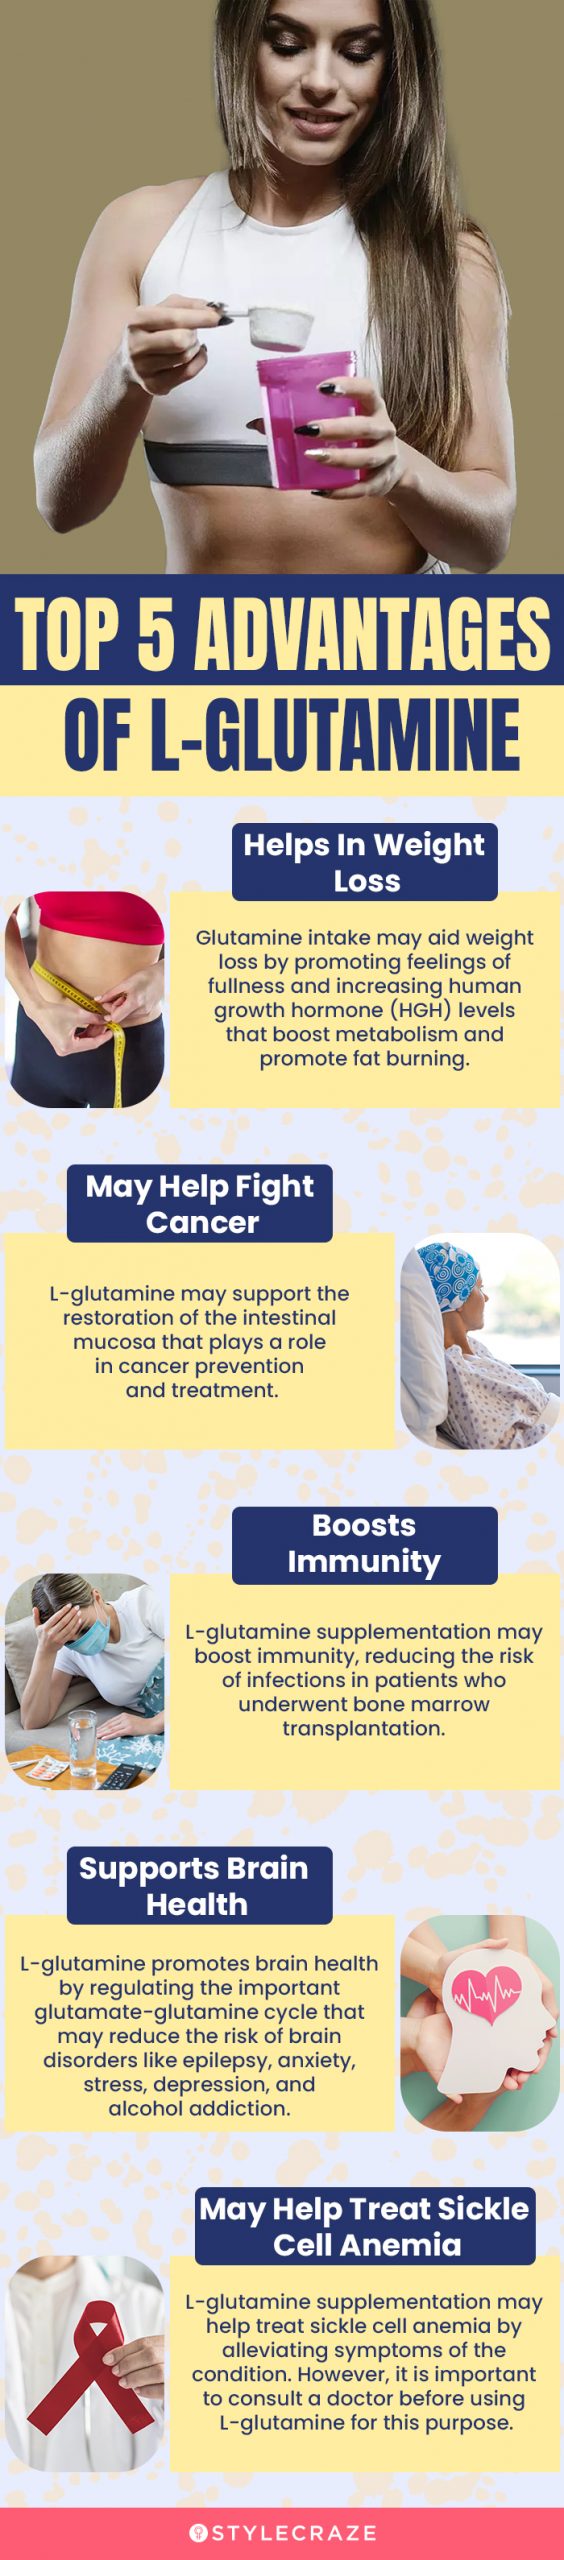 top 5 advantages of l-glutamine (infographic)